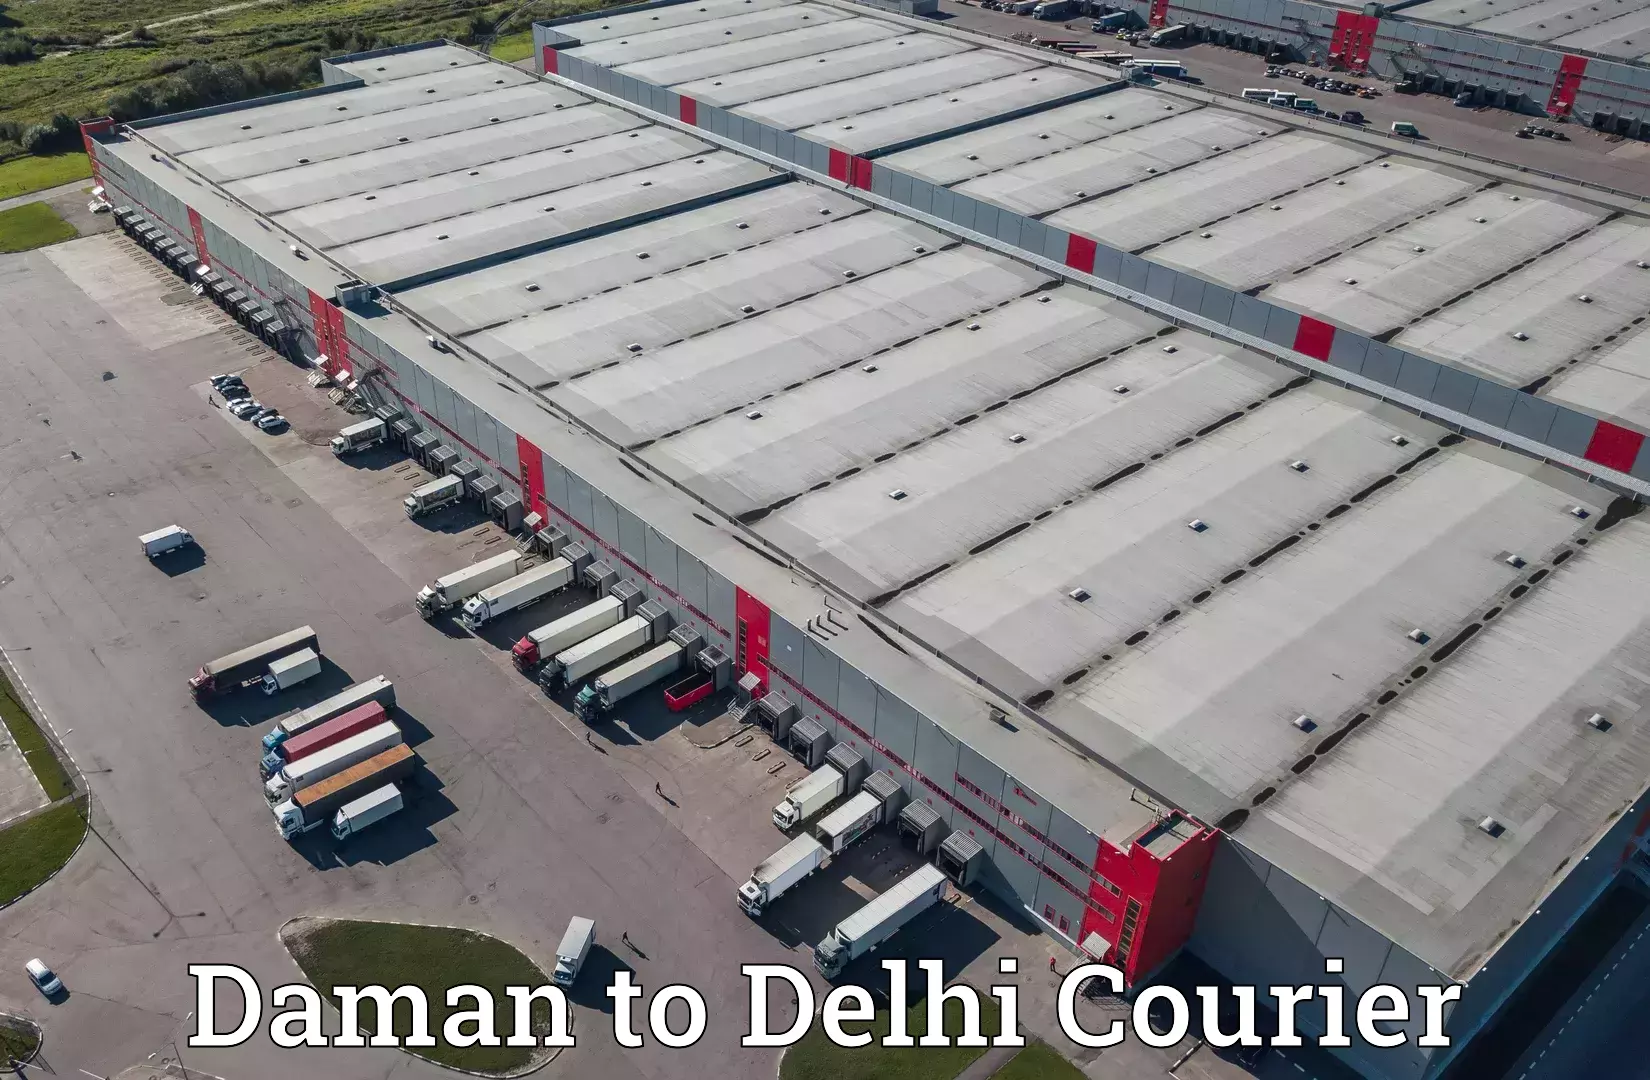 Delivery service partnership Daman to Delhi